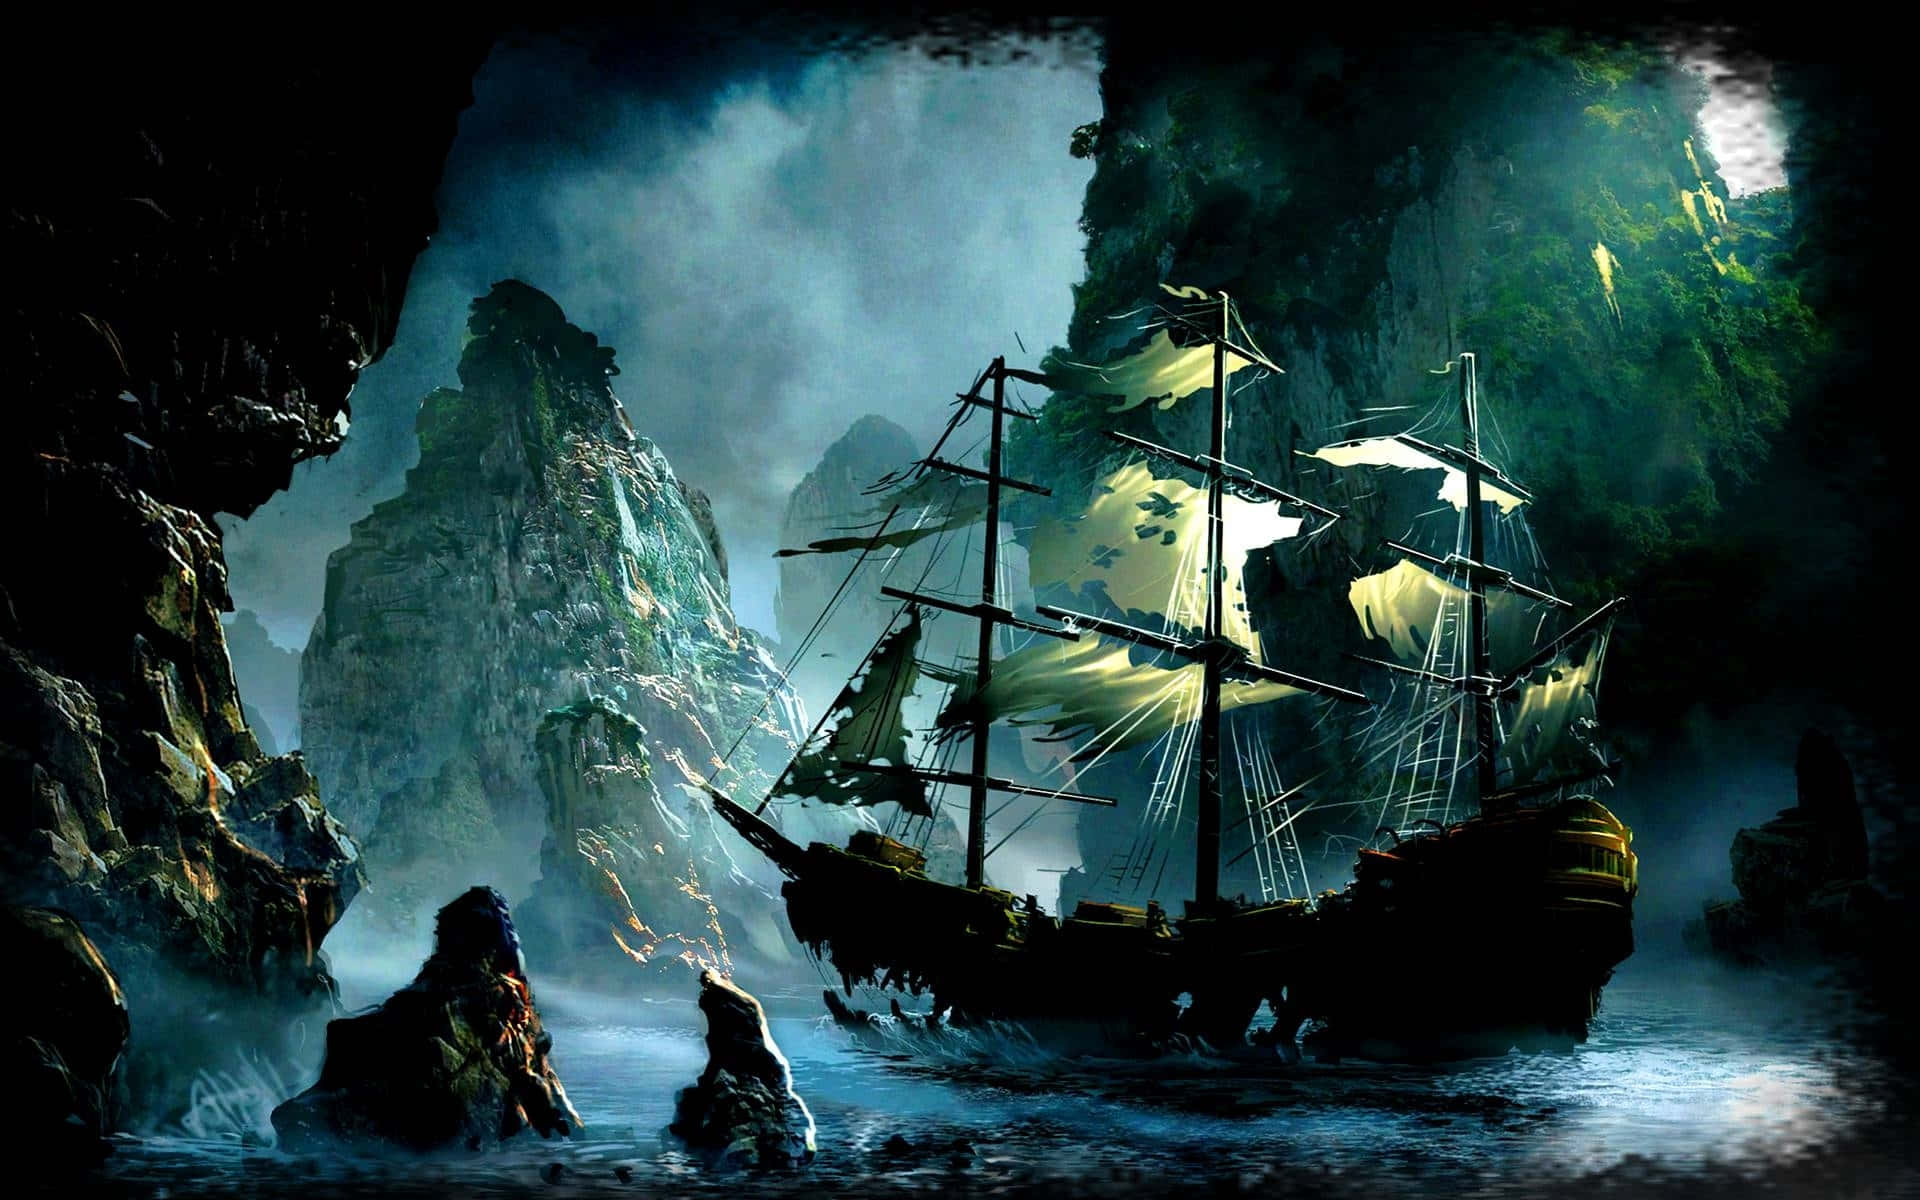 Captain Jack Sparrow ventures into a thrilling adventure